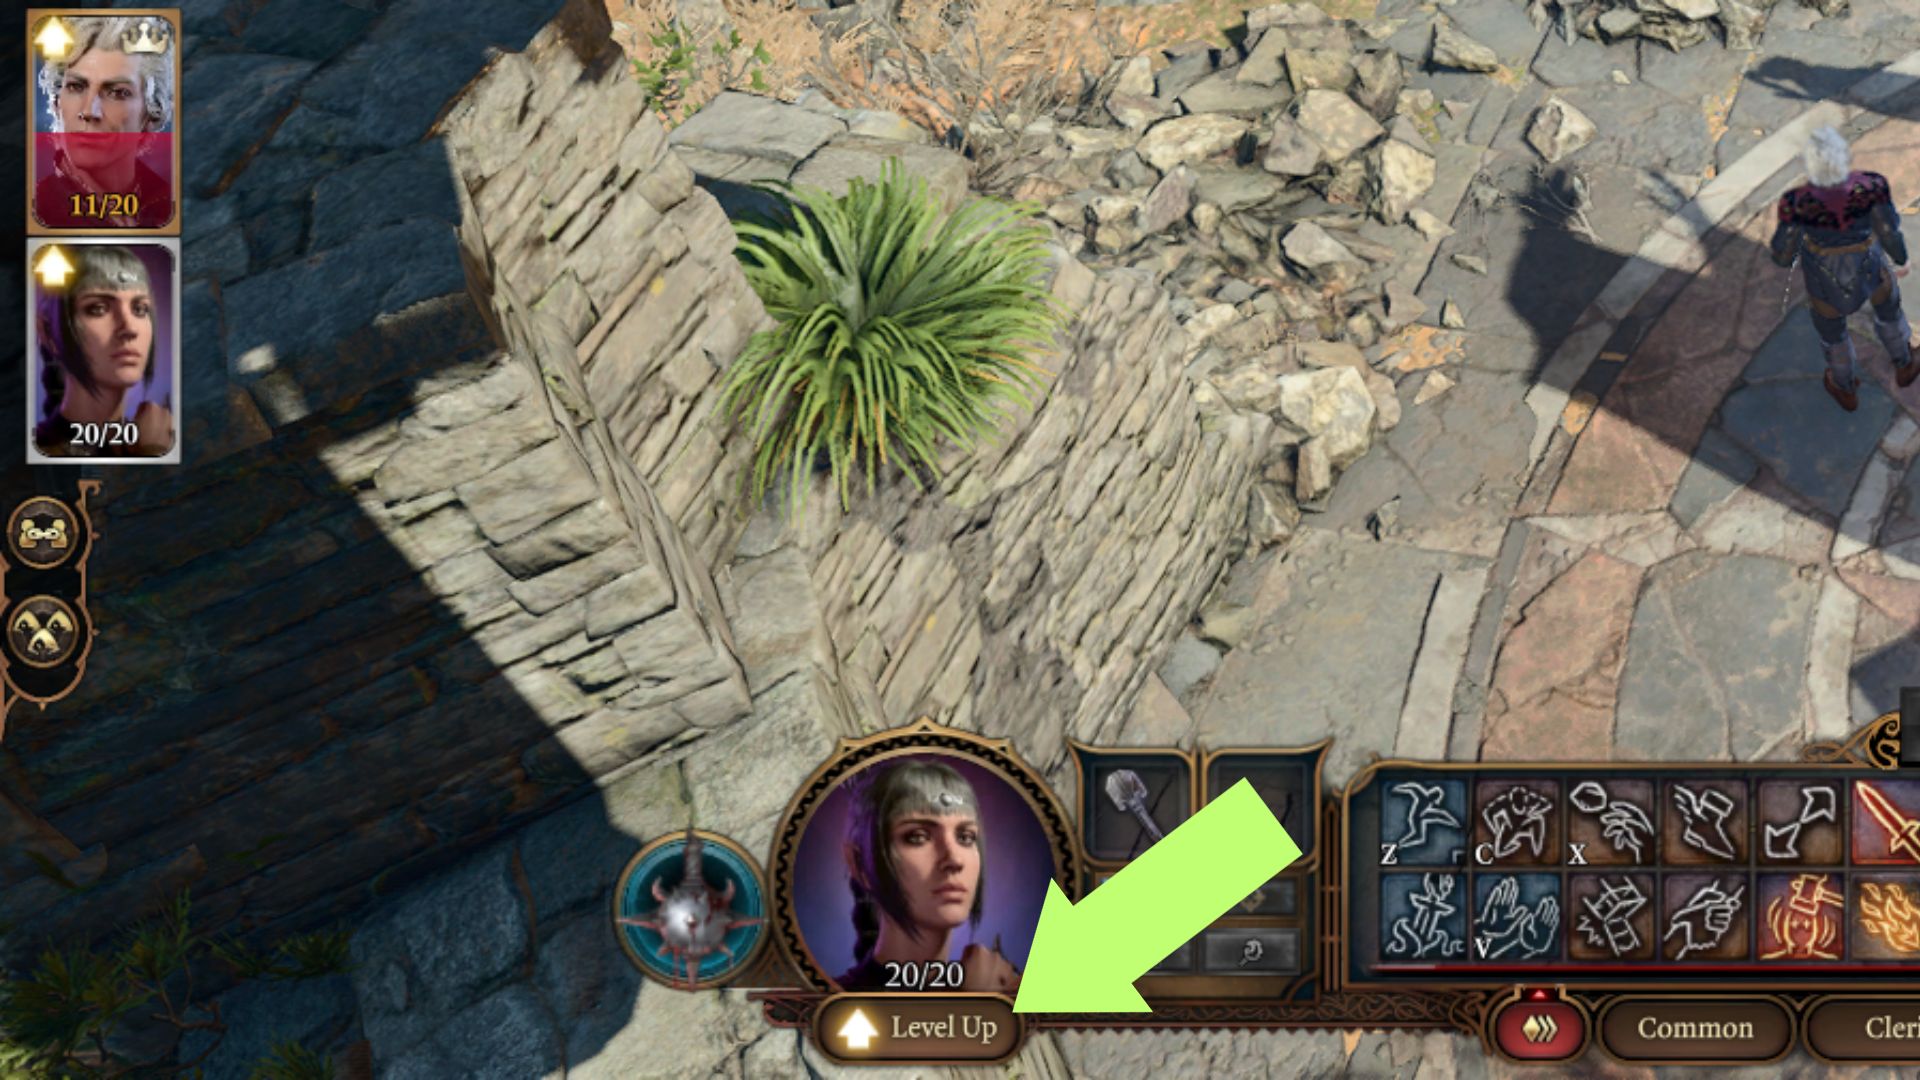 A screenshot of the Level Up button in Baldur's Gate 3. 